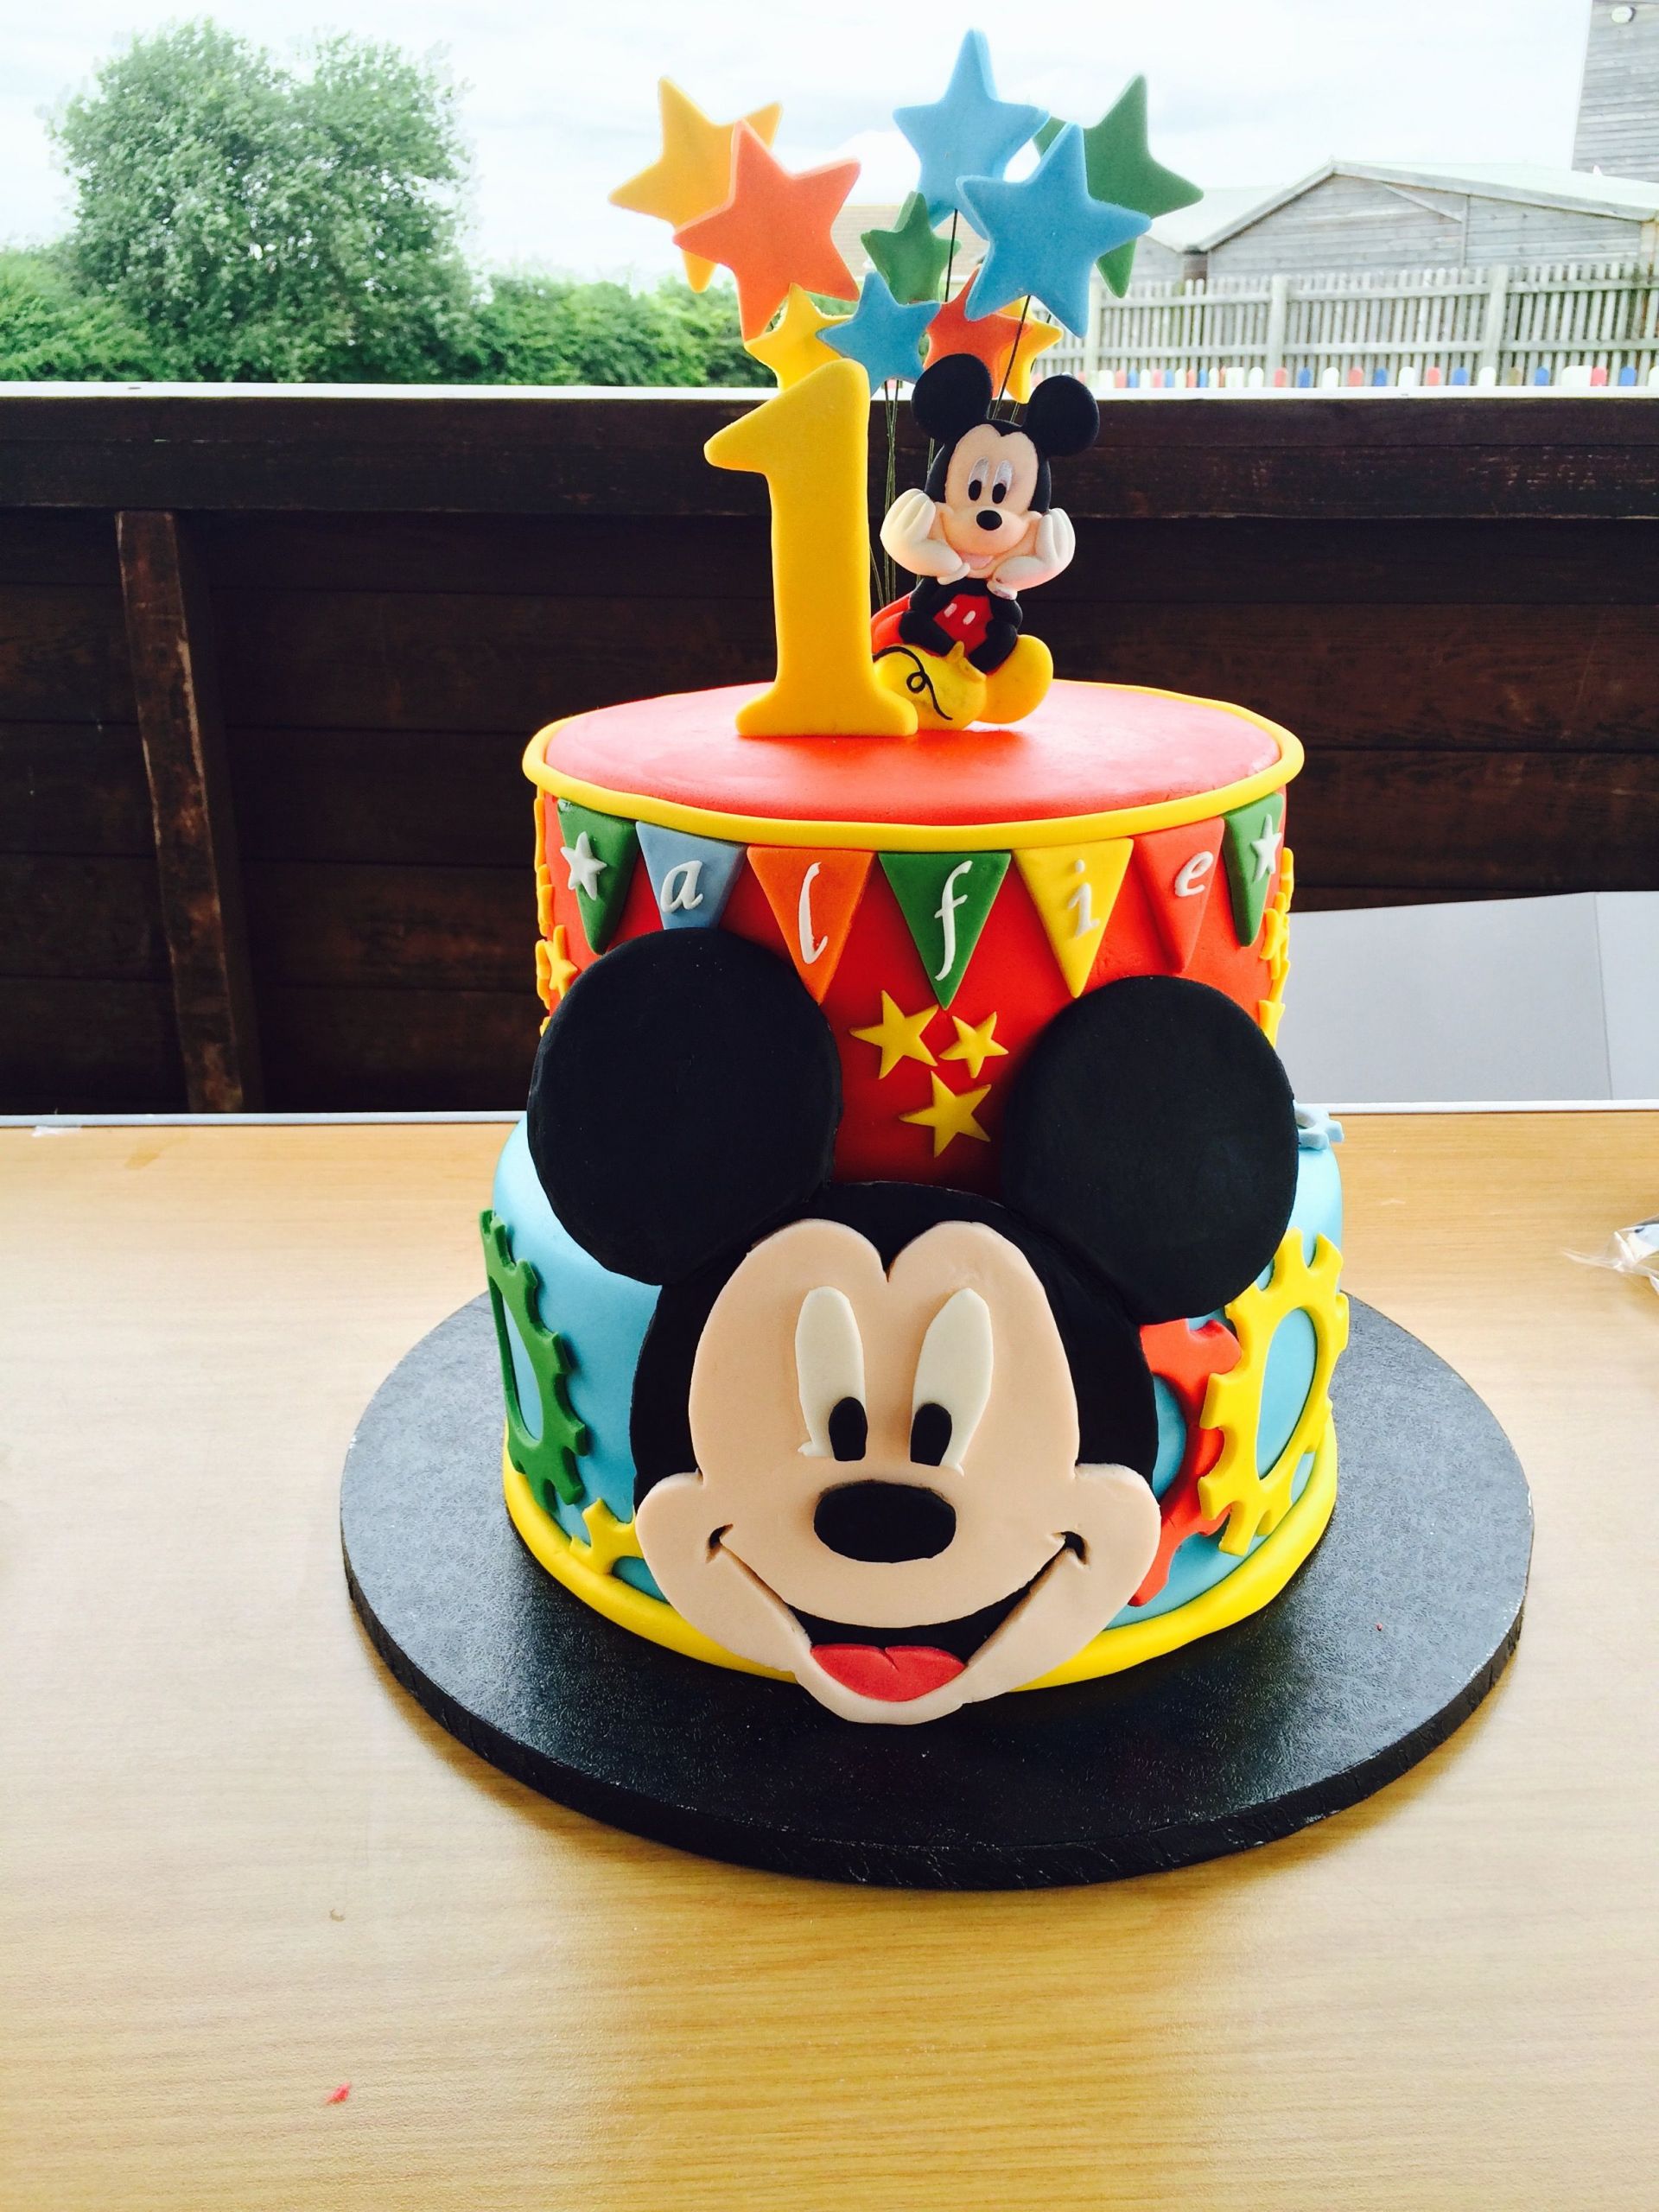 Mickey Mouse Birthday Cake Decorations
 Mickey Mouse birthday cake … in 2019